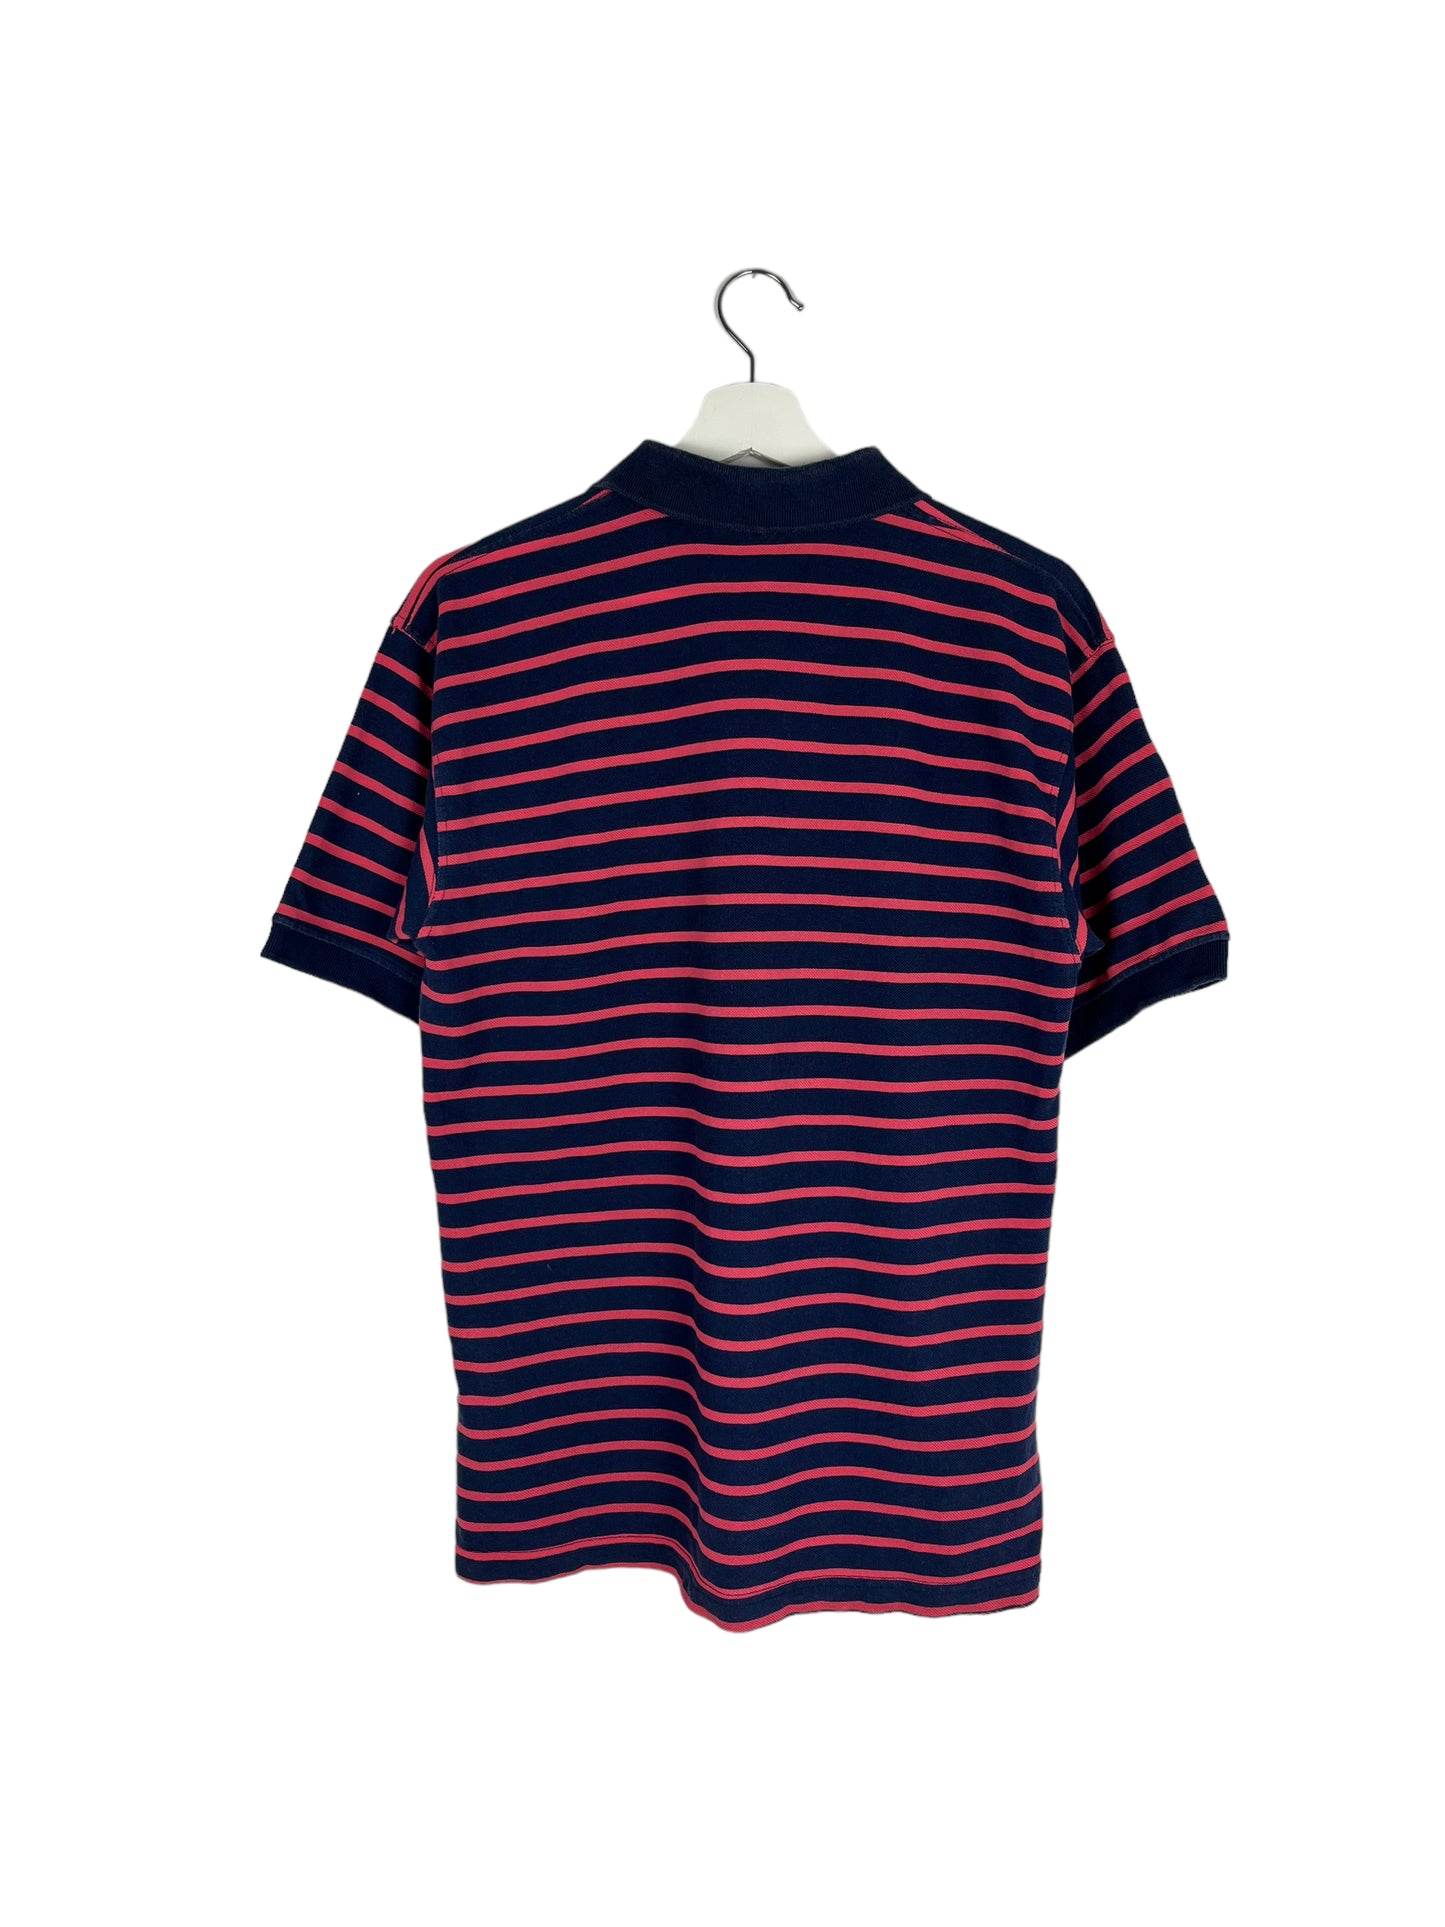 Vintage 90's Lacoste Striped Polo Shirt - Medium